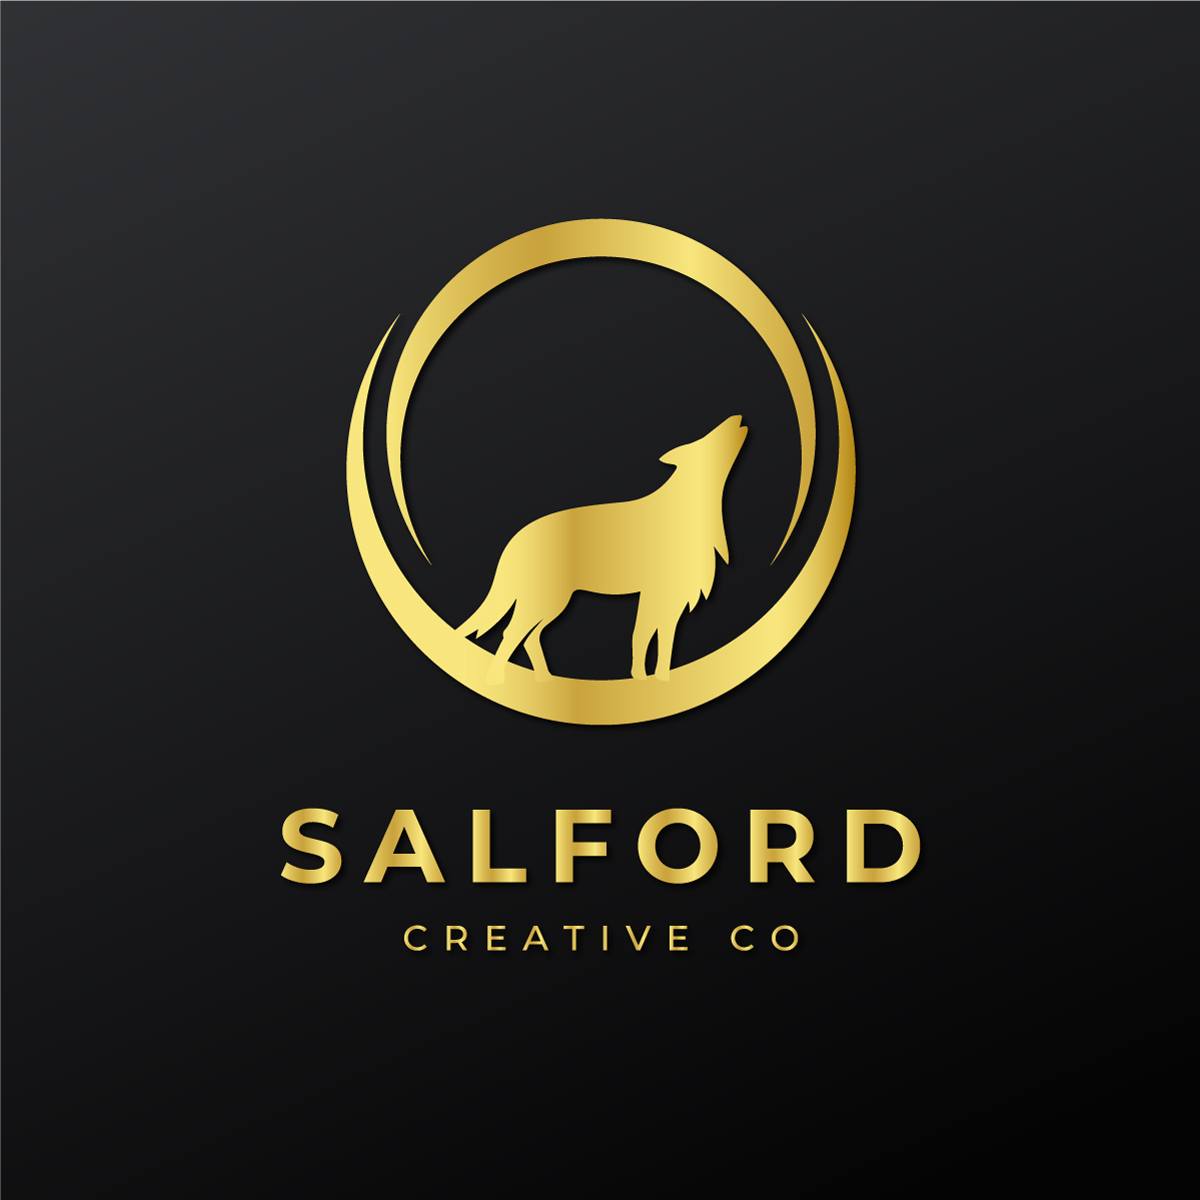 Creative Circle Fox Shilouette Logo Design for company preview image.